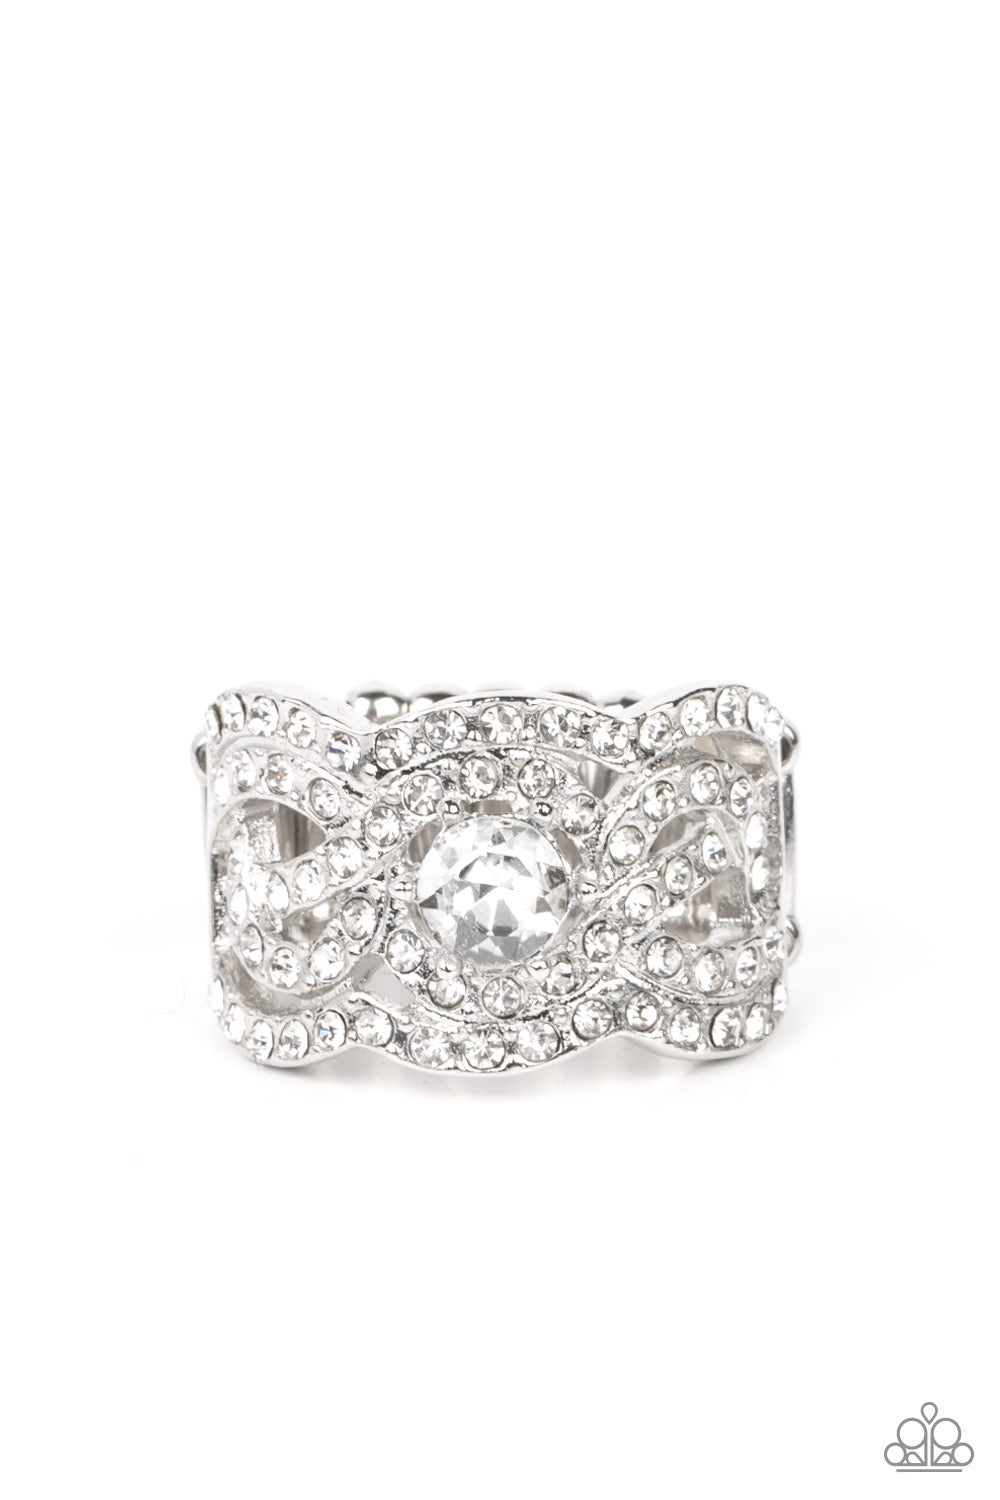 Doting on Dazzle White Rhinestone Ring - Paparazzi Accessories- lightbox - CarasShop.com - $5 Jewelry by Cara Jewels